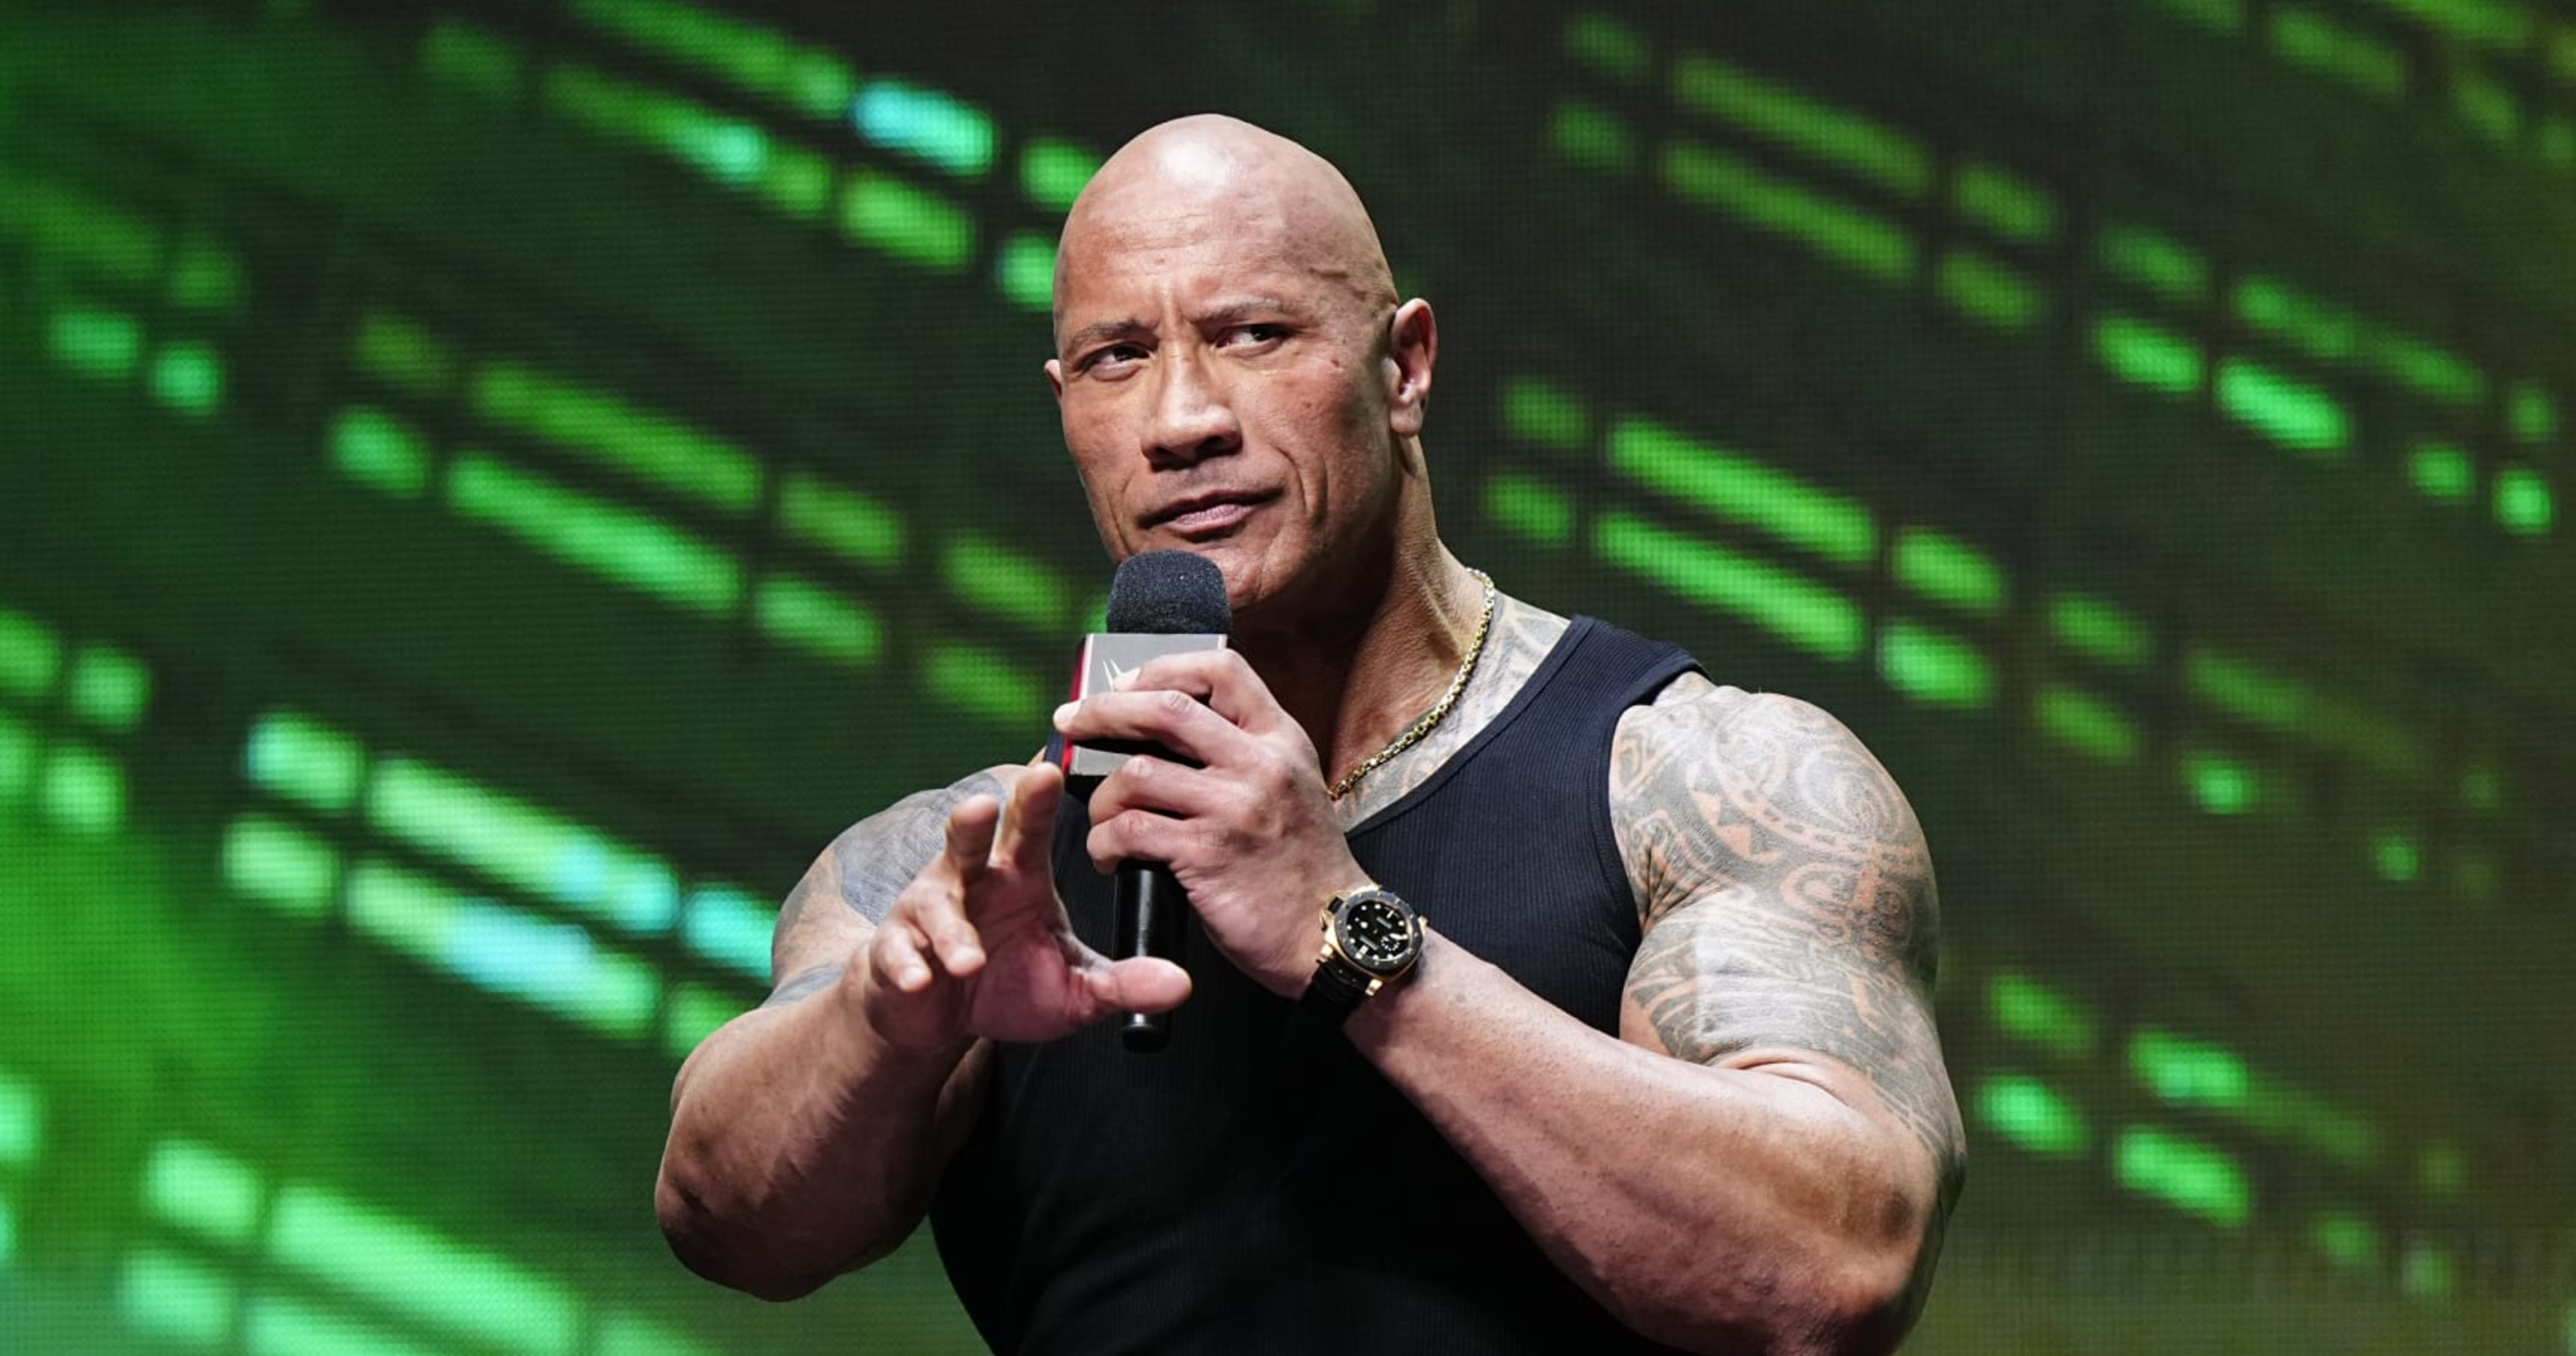 The Rock Addresses WWE Backstage Rumors on Profanity: 'I'd Rather Be ...